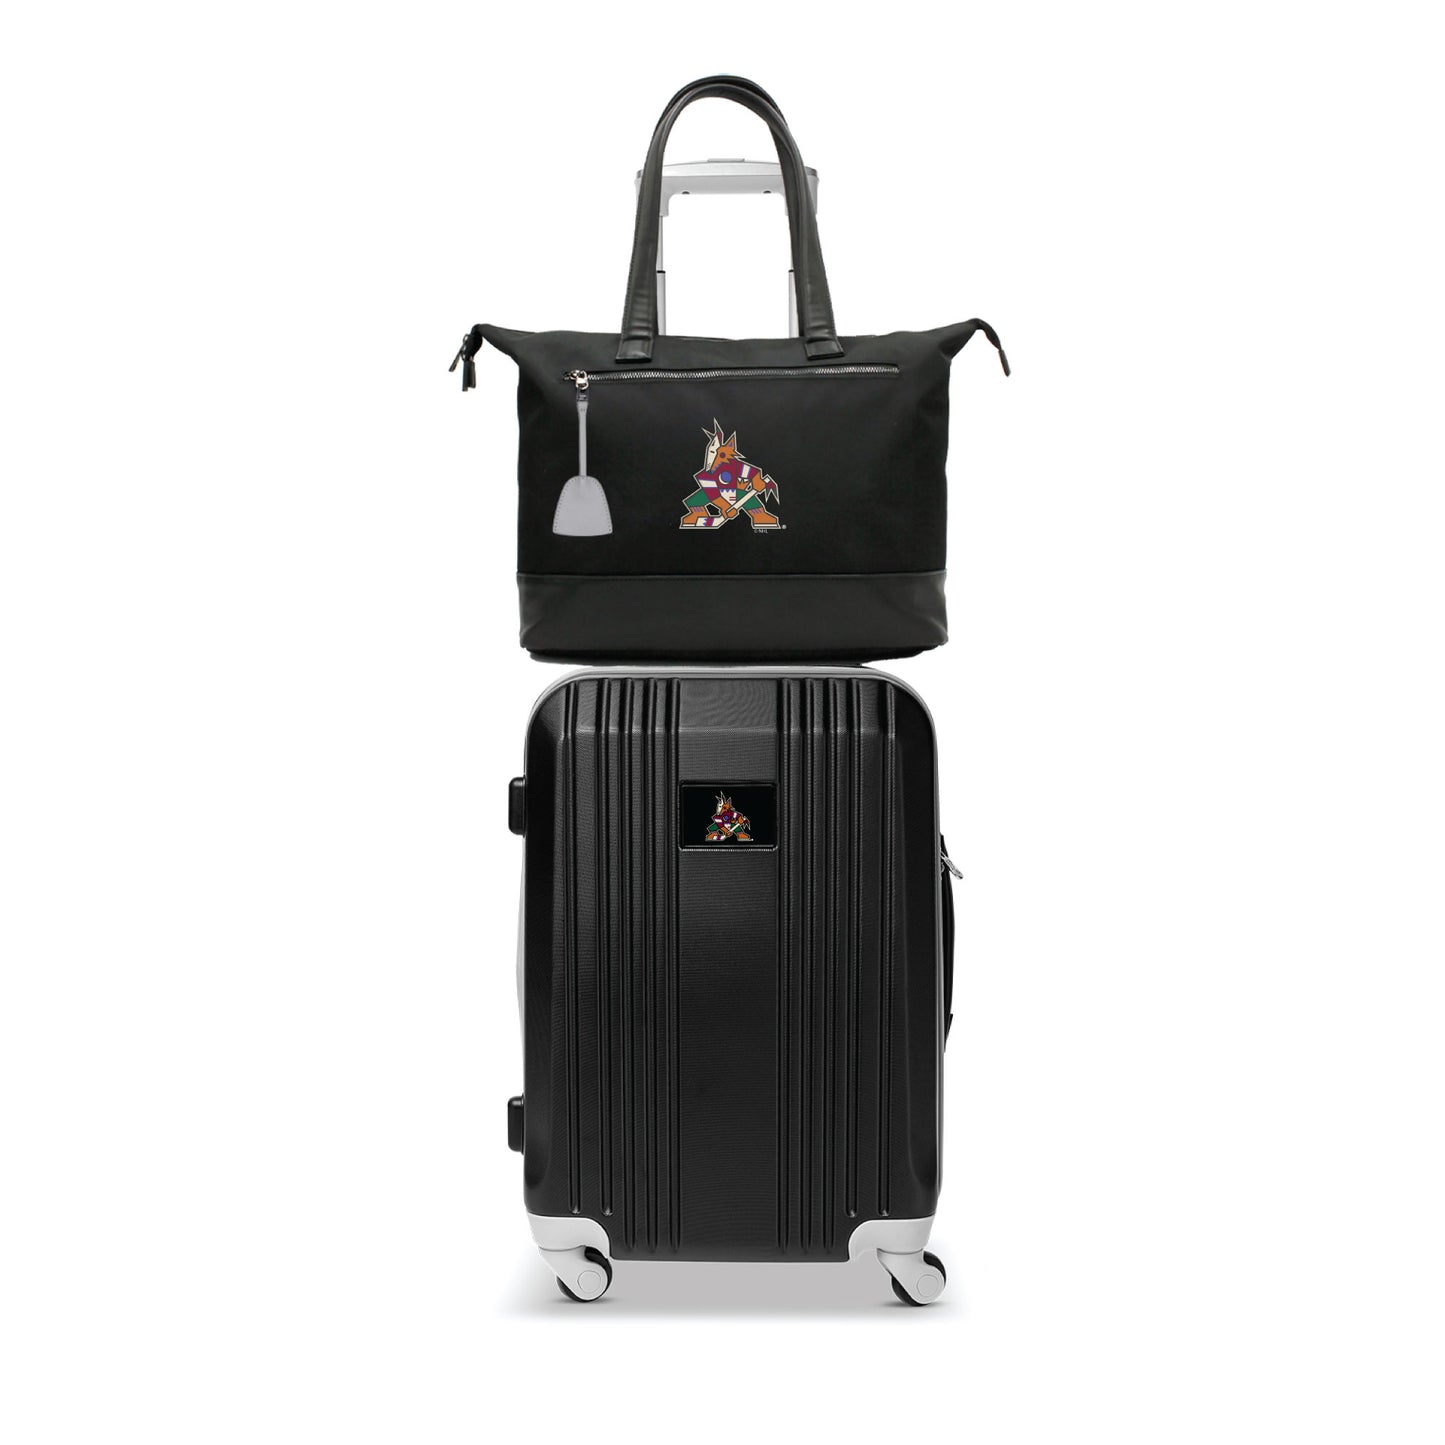 Arizona Coyotes Premium Laptop Tote Bag and Luggage Set